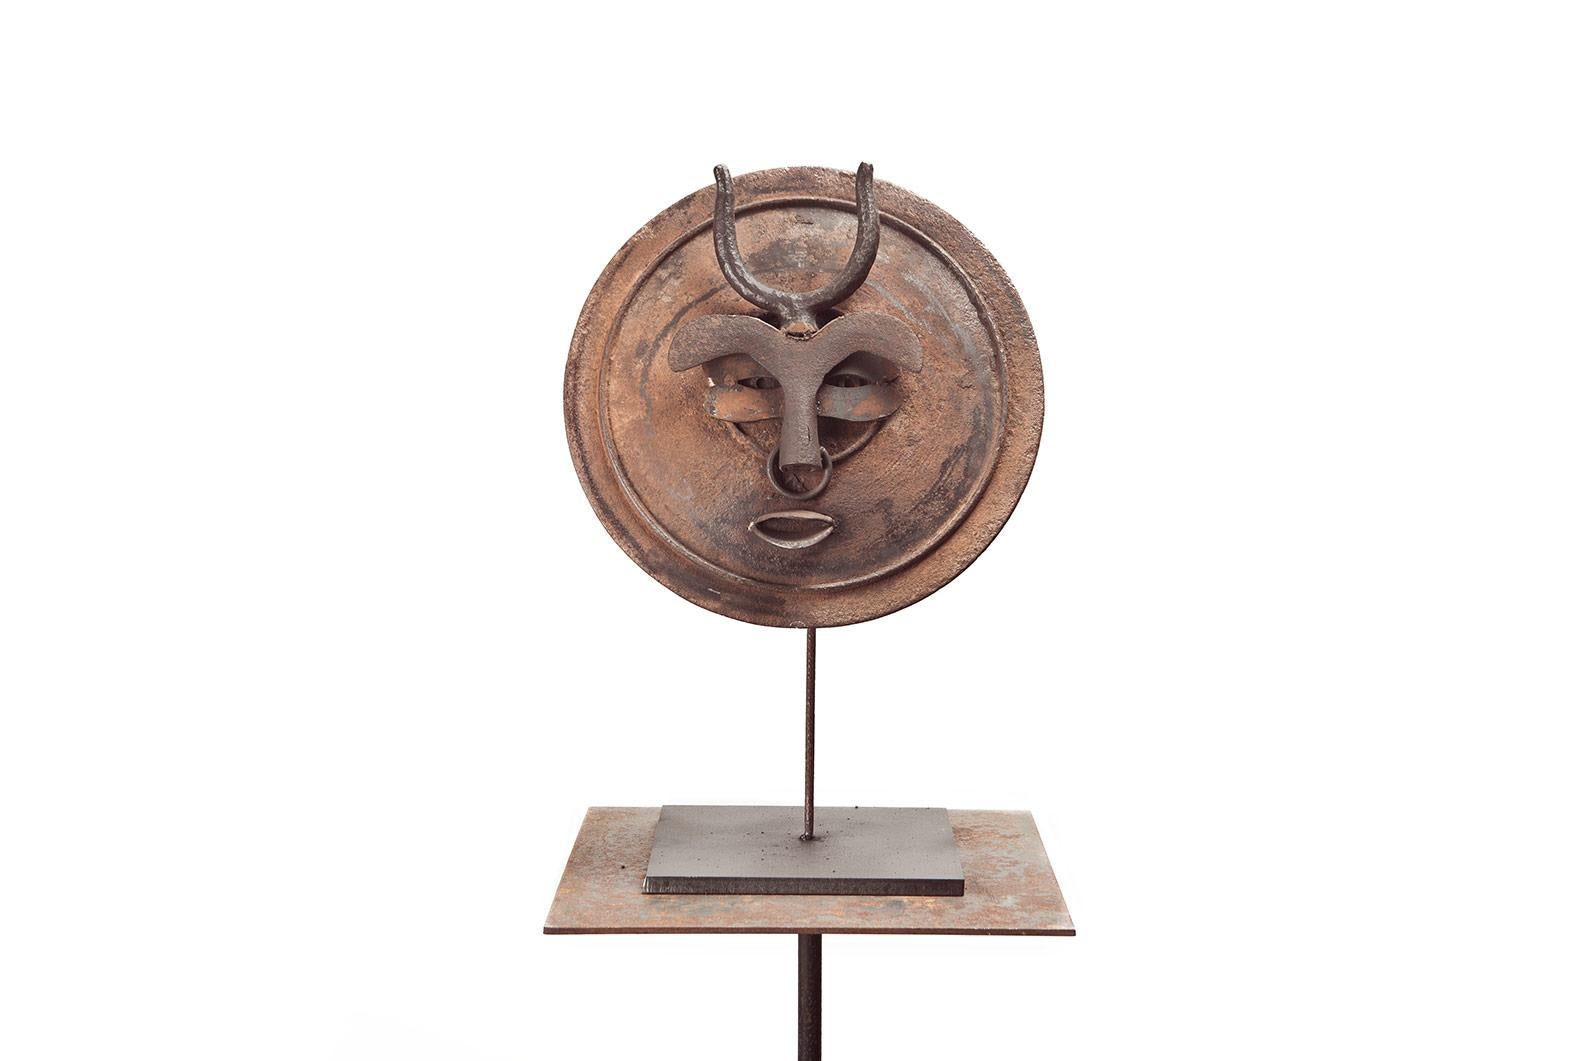 Máscara Azteca - 21. Jahrhundert, Contemporary Sculpture, Figurativ, Recycelte Objekte – Mixed Media Art von Miquel Aparici